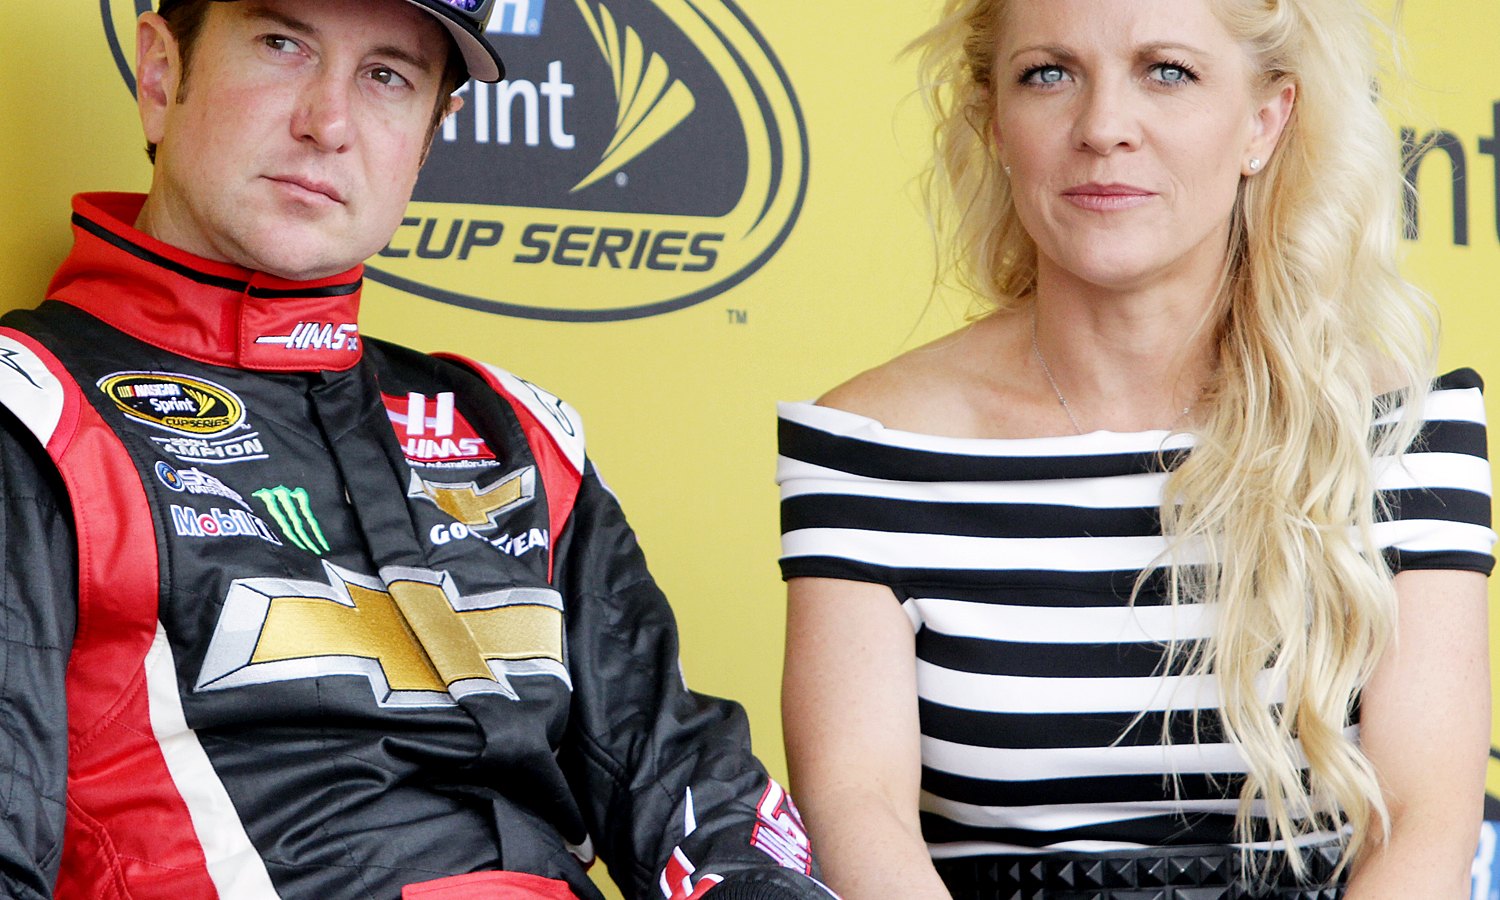 NASCAR driver Kurt Busch and Patricia Driscoll